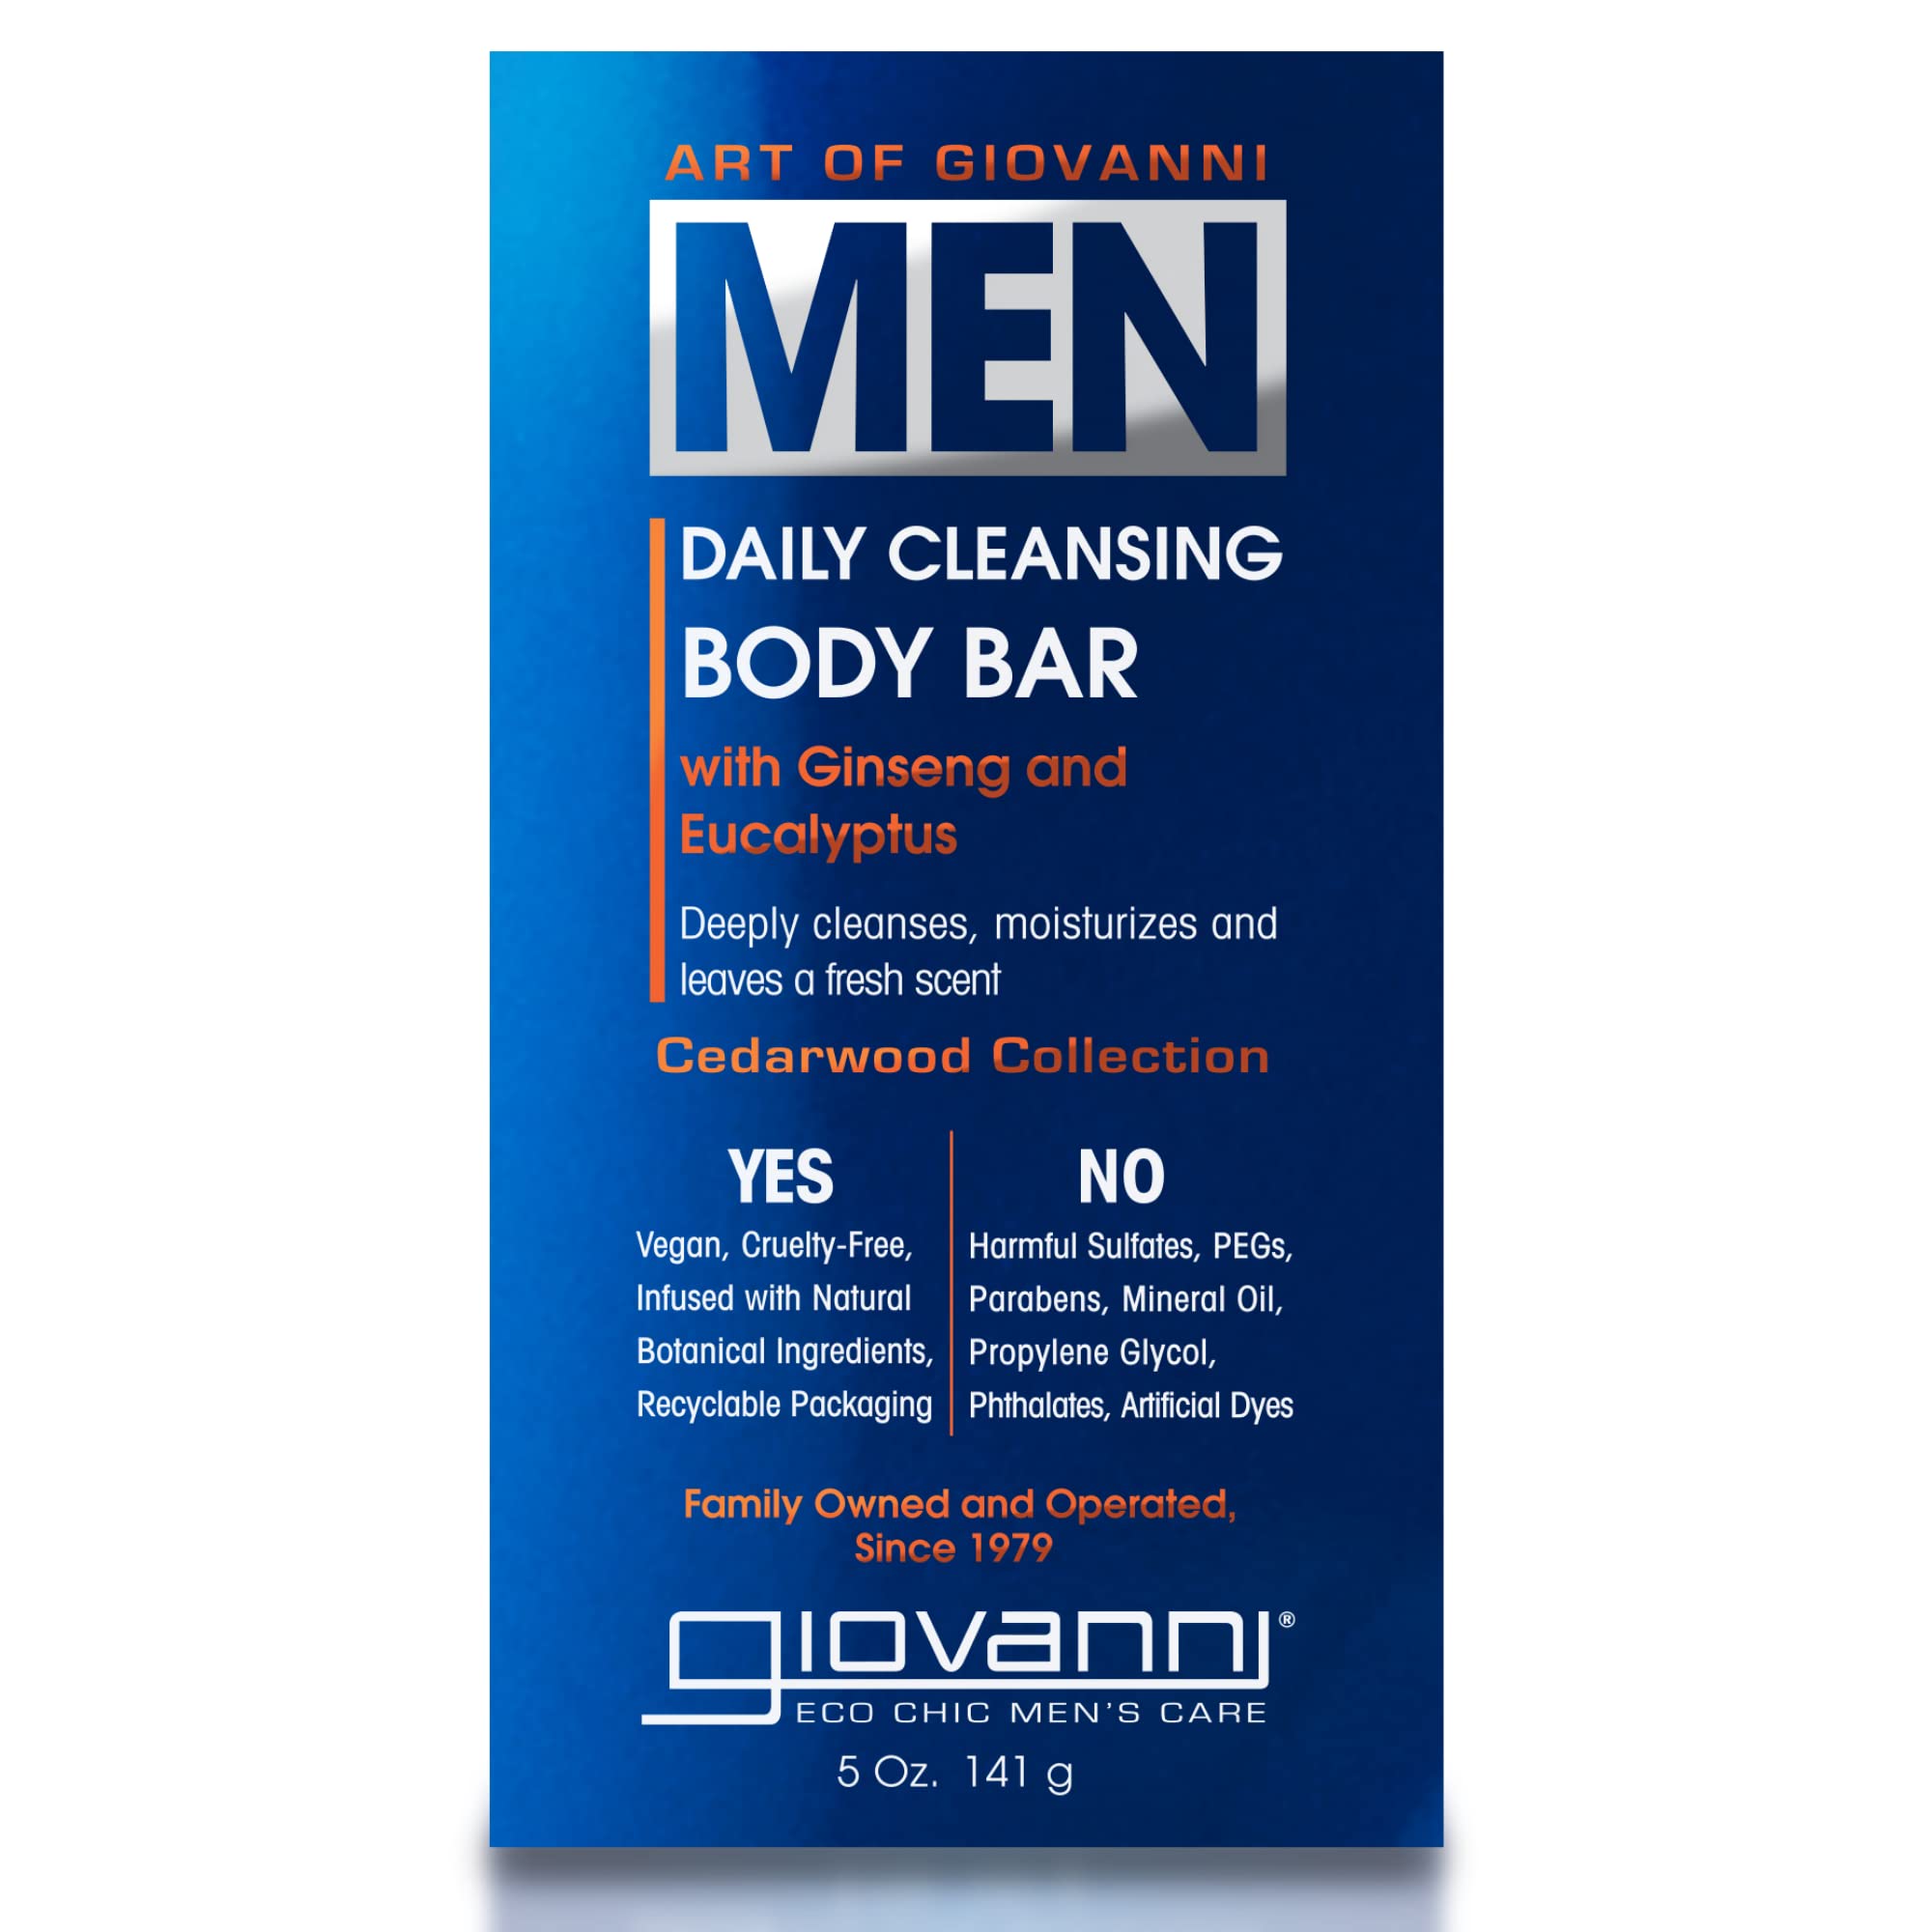 Giovanni Daily Cleansing Men Body Bar - 5 oz